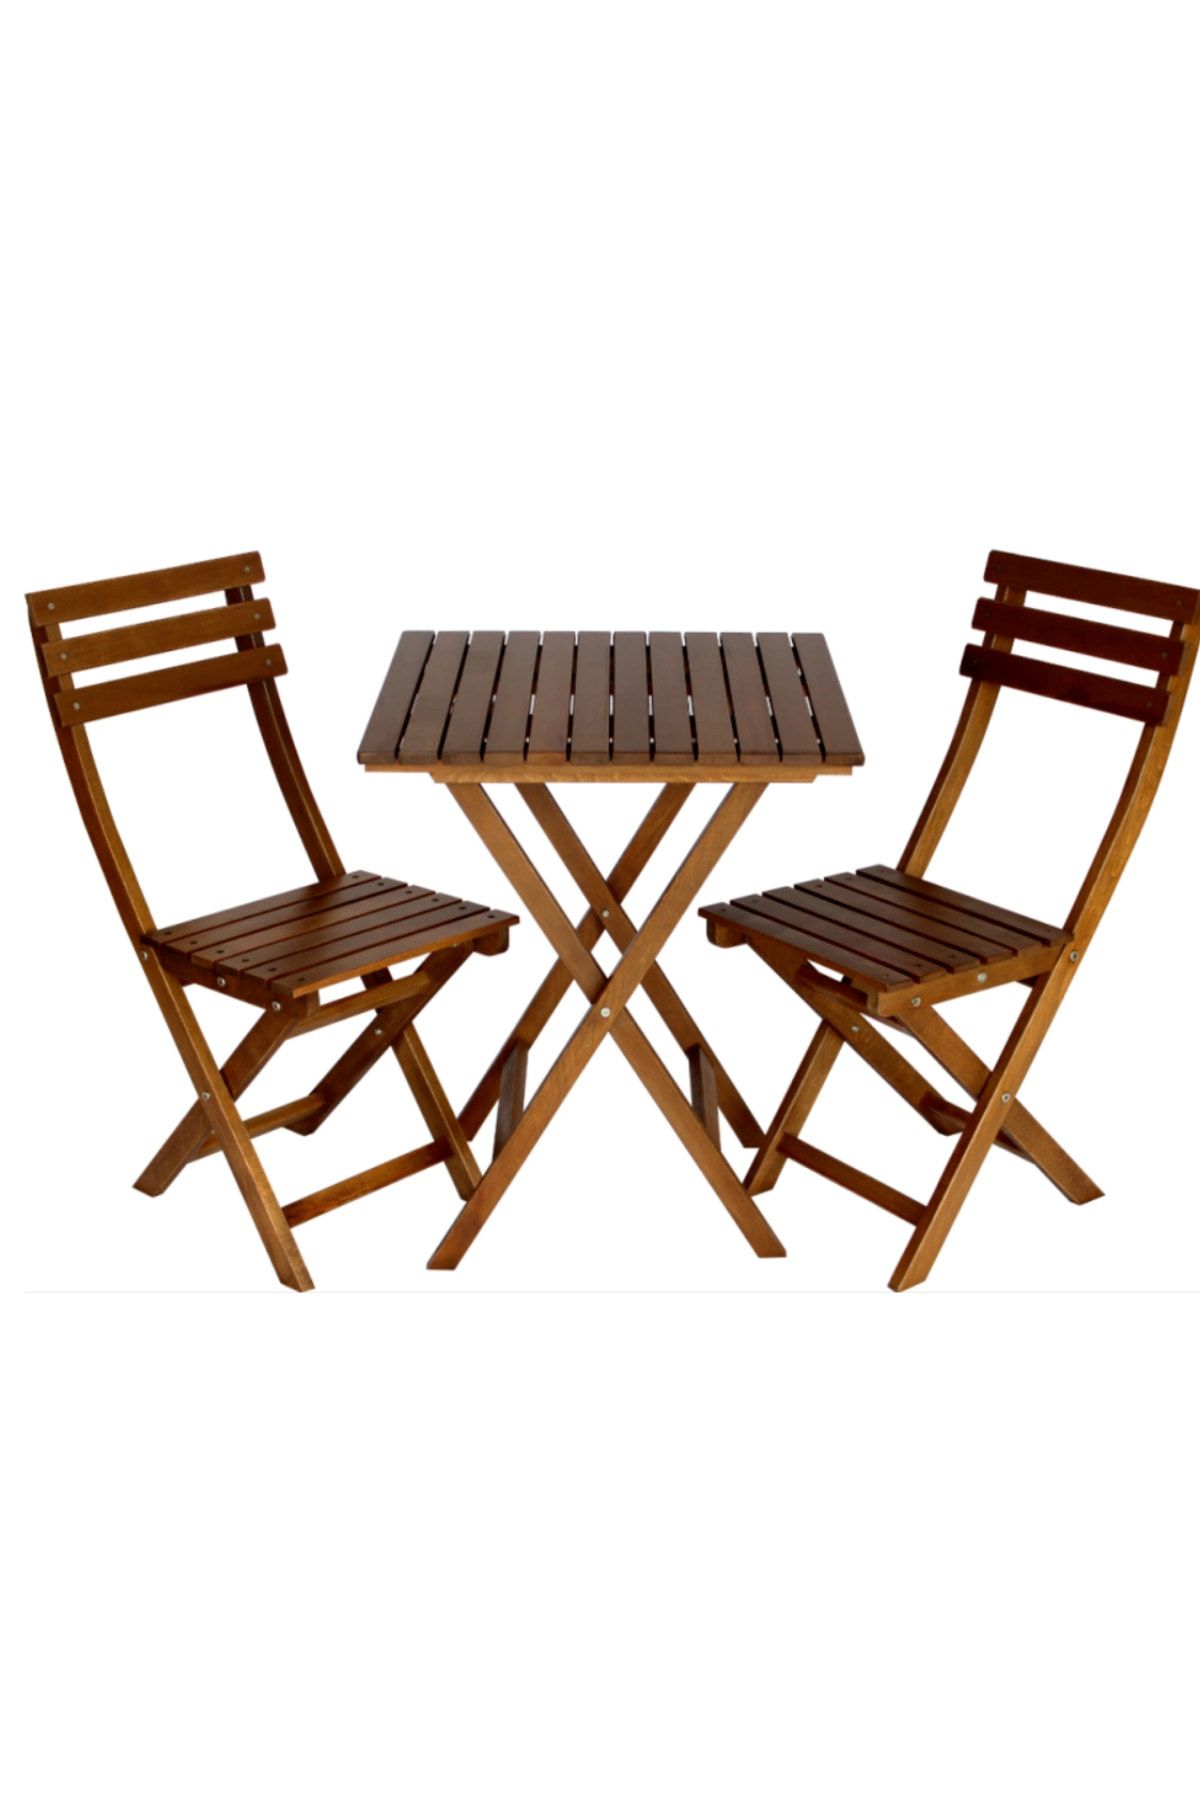 Ustoll Furniture Ada Ahşap Oturma Takımı Sandalye Masa Takımı Bahçe Masa Takımı Balkon Masa Takımı